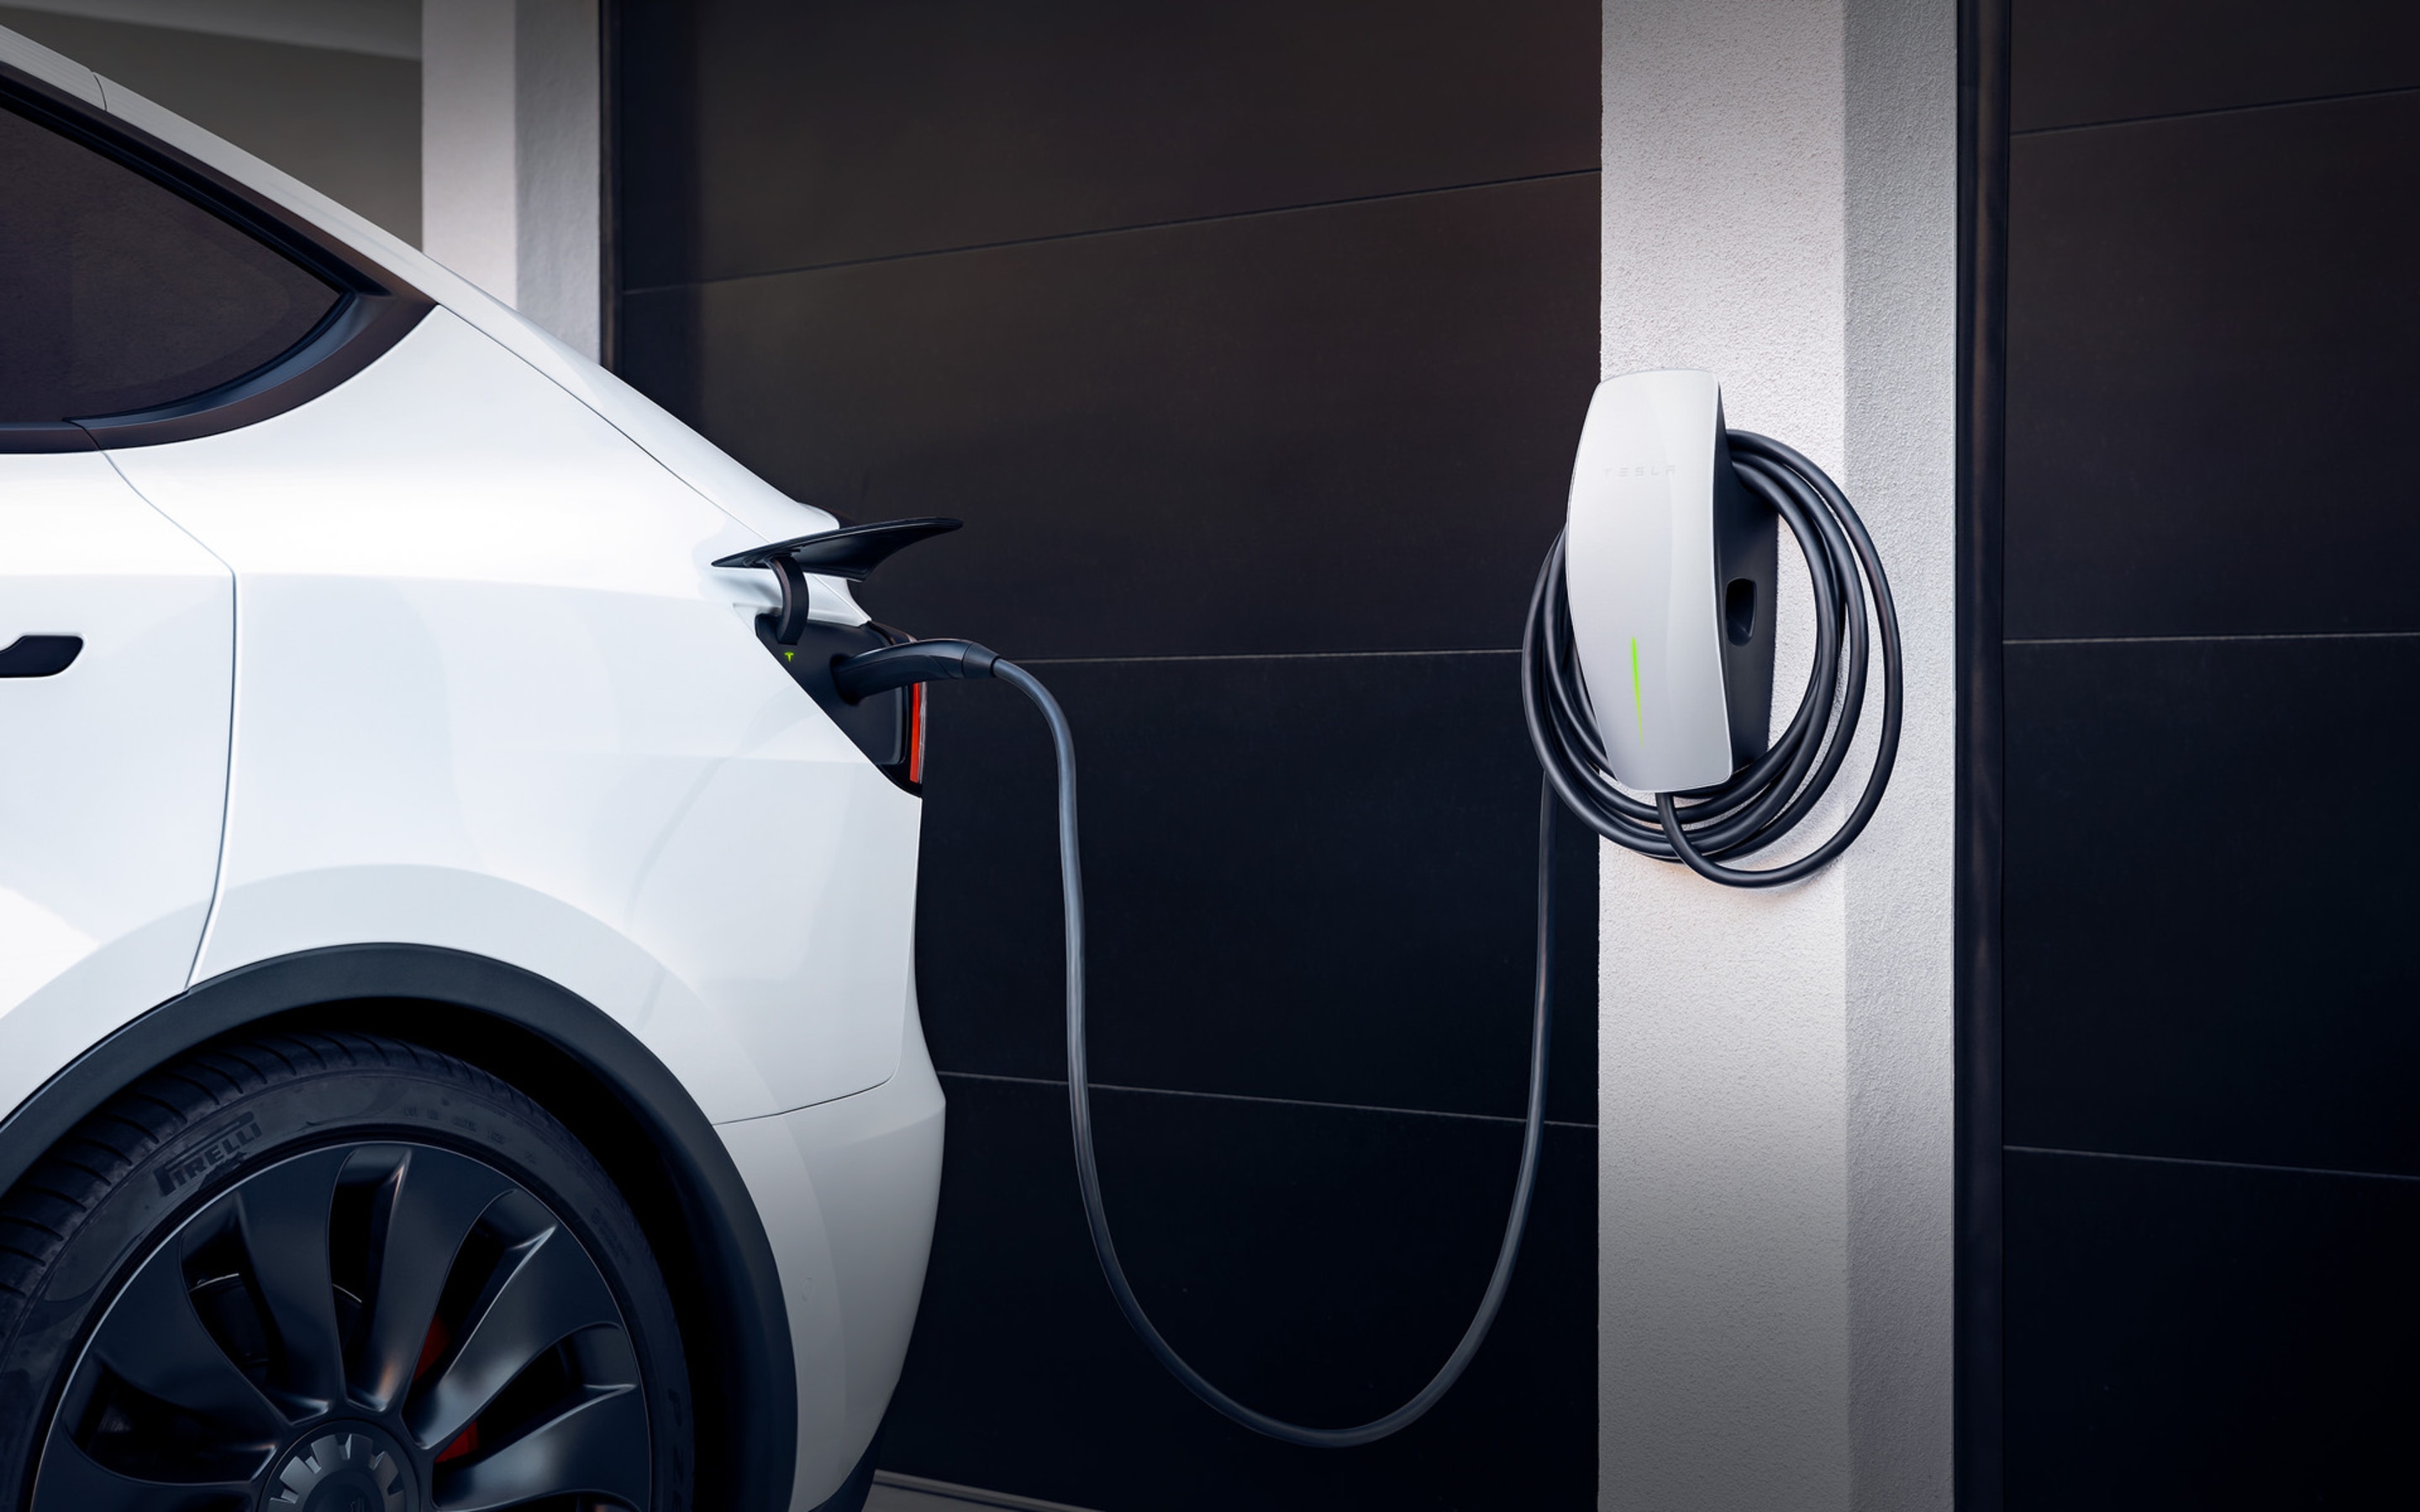 Car charging via Wall Connector